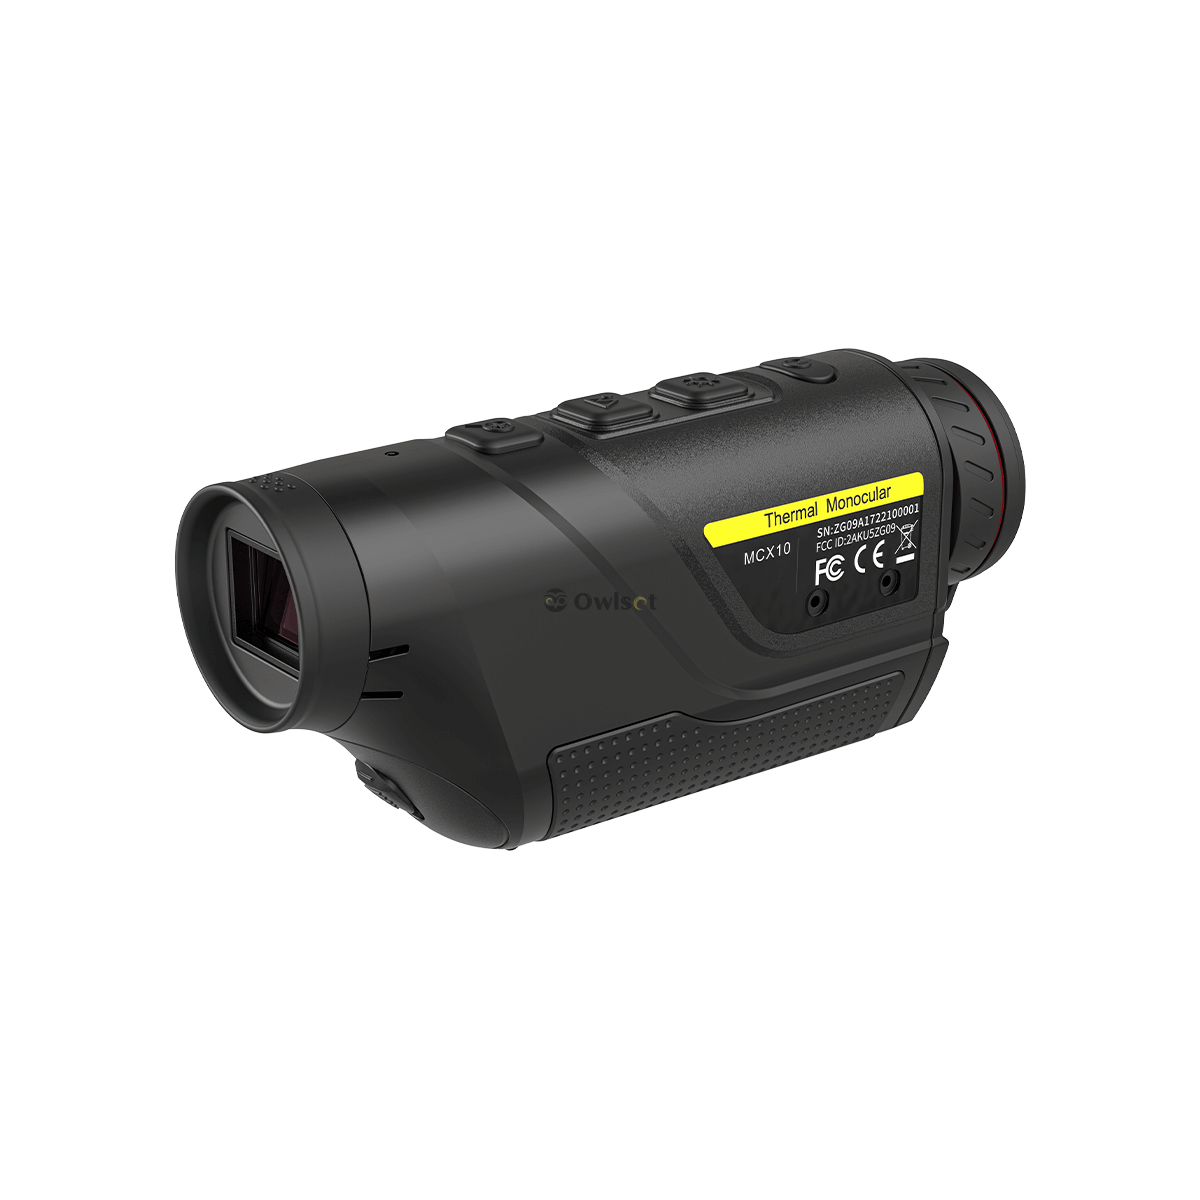 OwlSet MXC10 Handheld Thermal Imaging Monocular